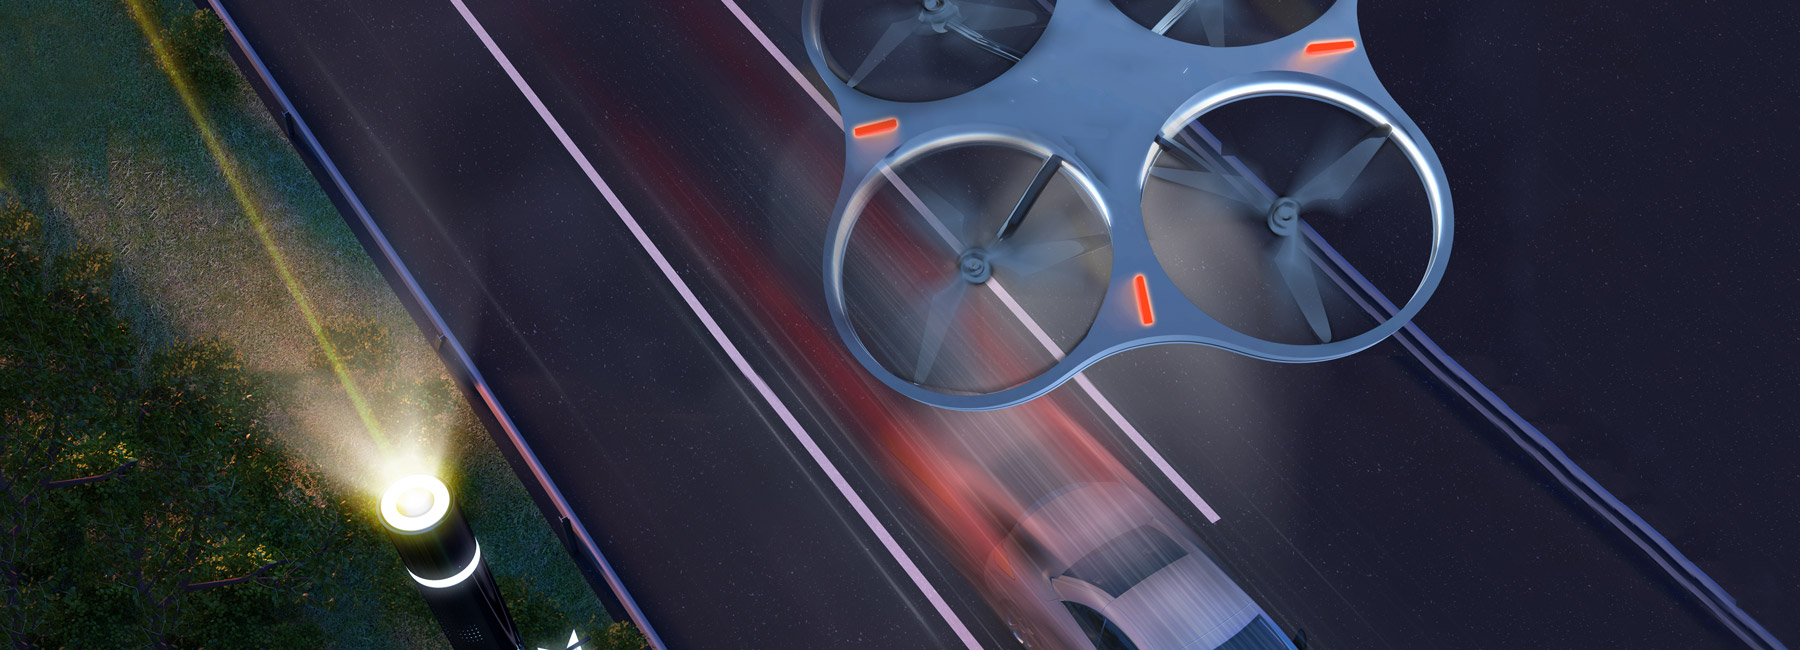 flying-poles-drones-assist-self-driving-cars-designboom-1800.jpg